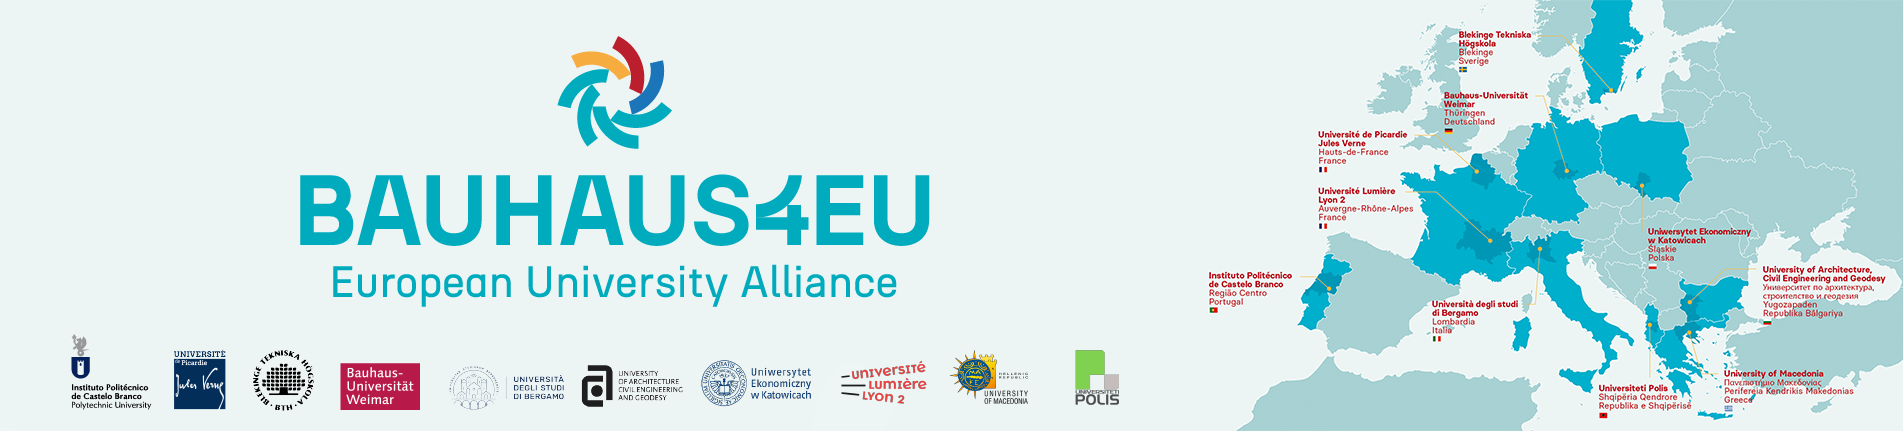 IPCB integra Bauhaus4EU European University Alliance - Universidade Europeia